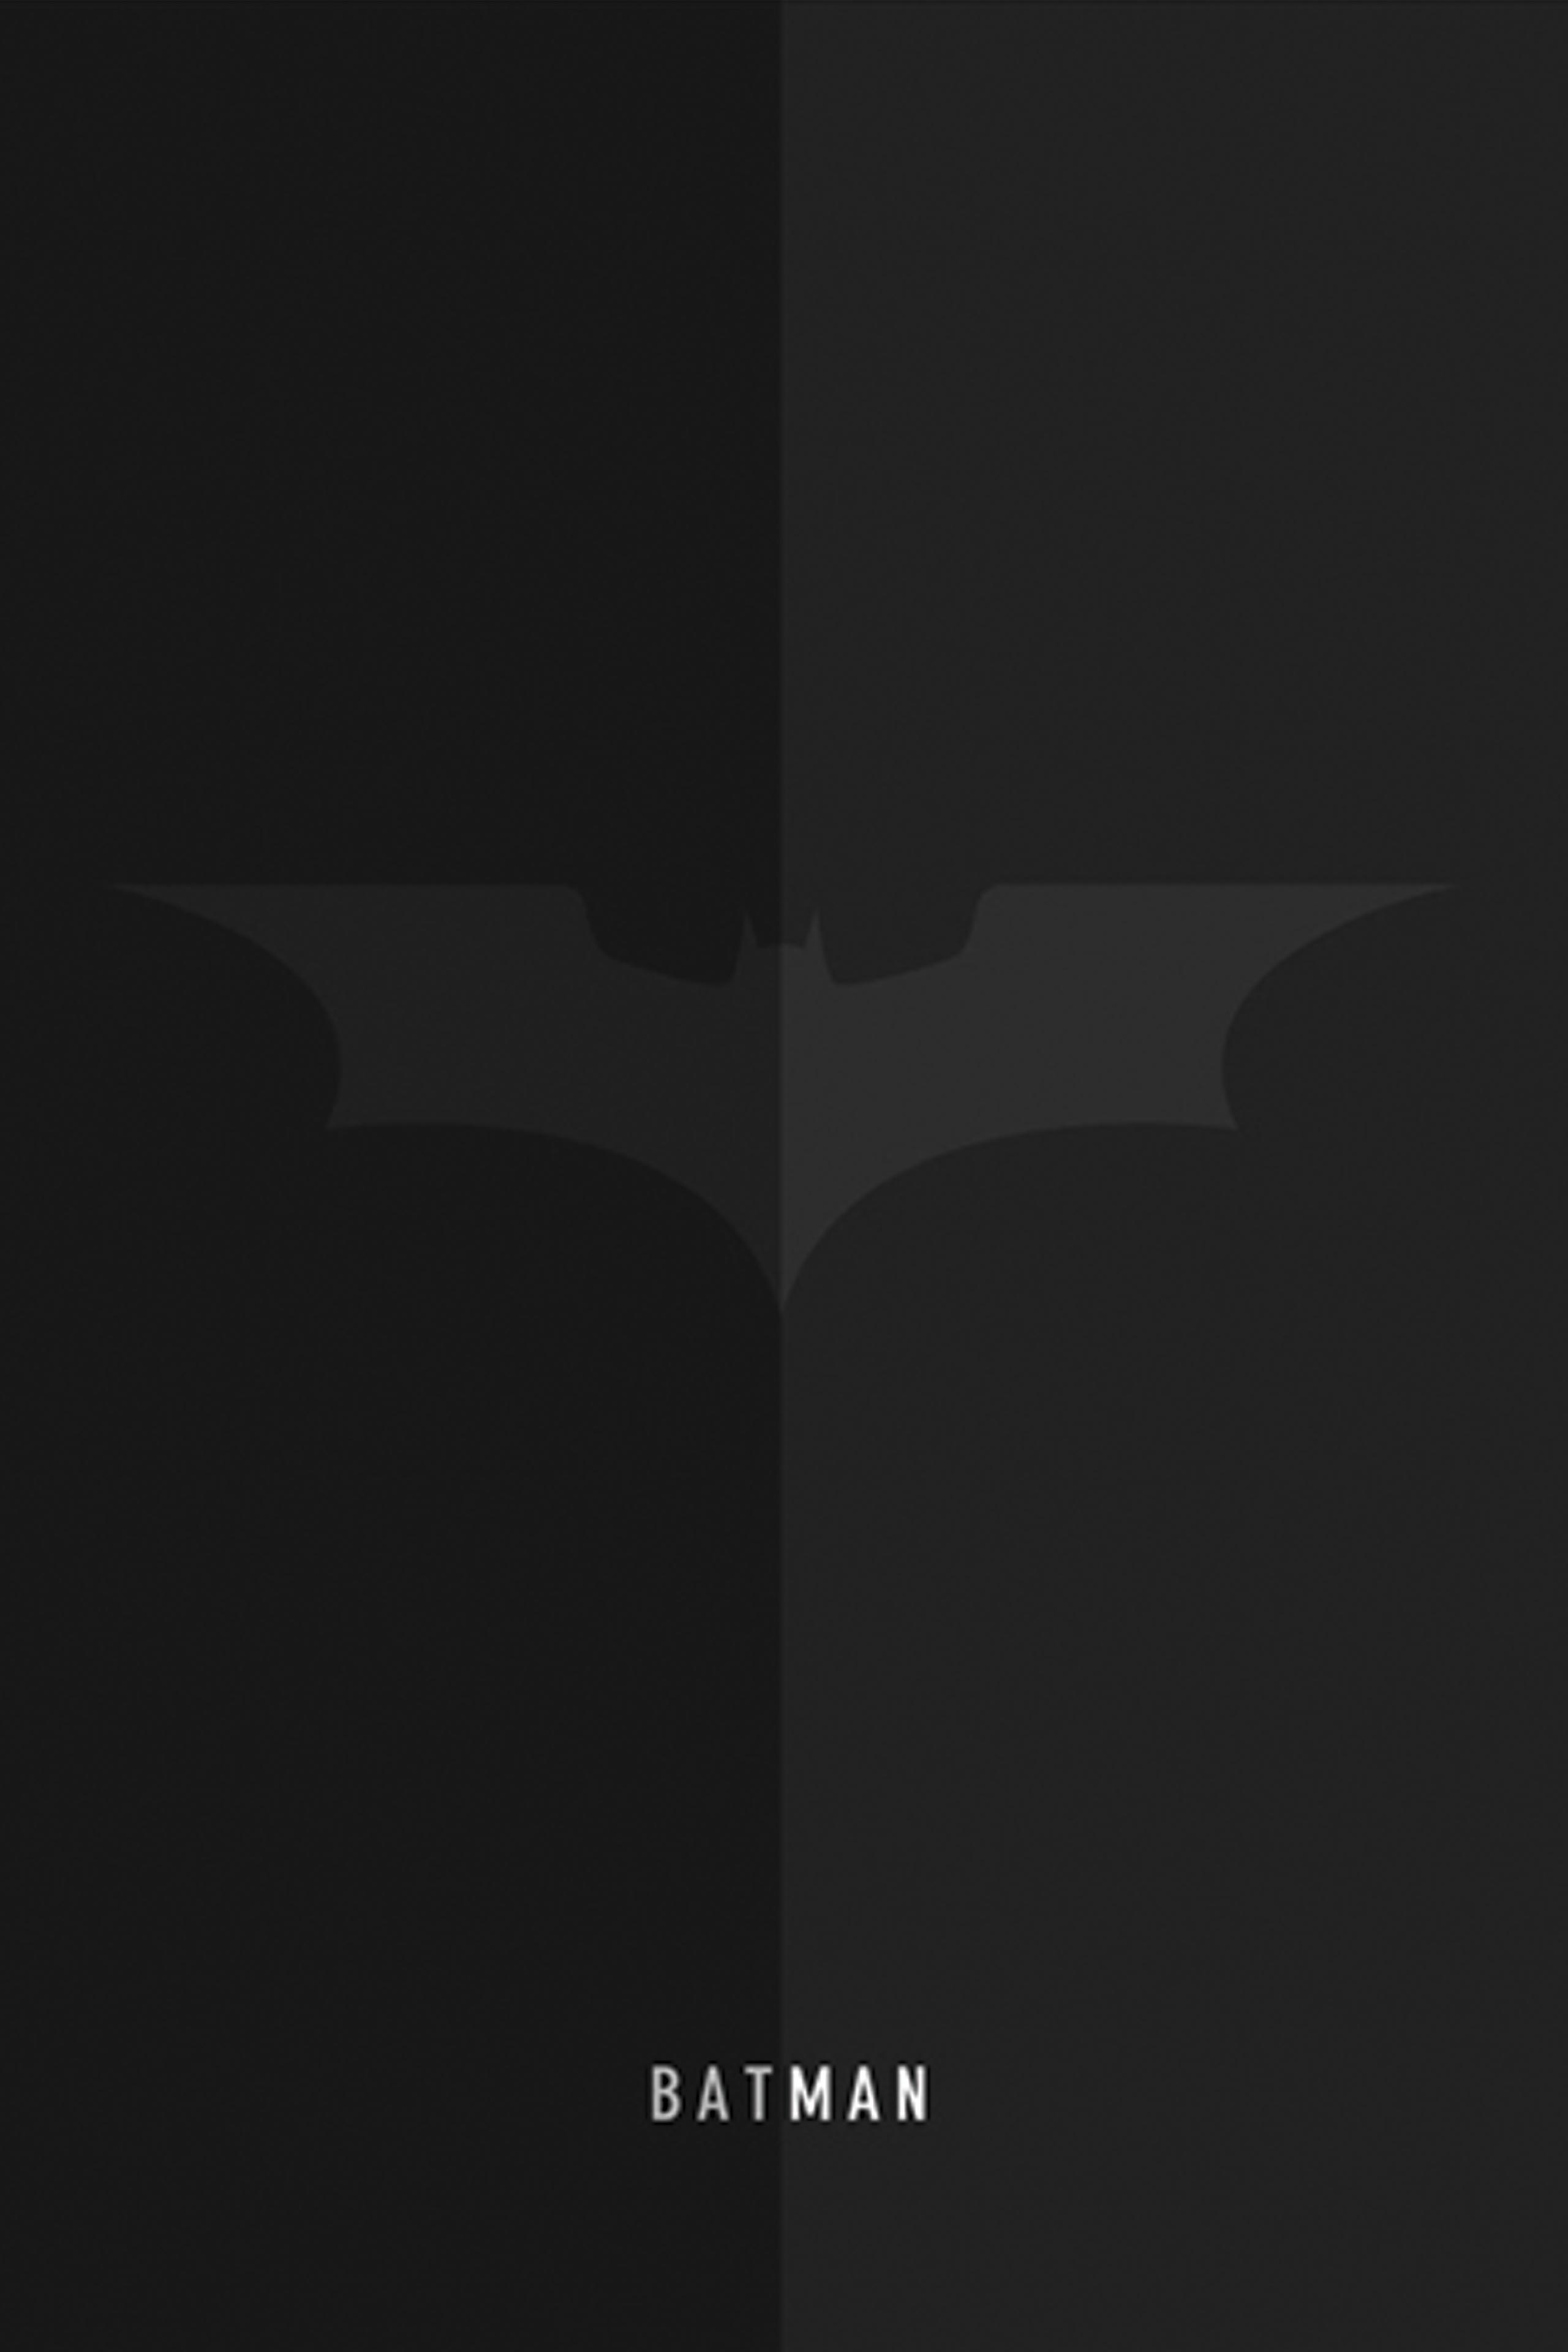 Batman iPhone Wallpapers   Top Free Batman iPhone Backgrounds